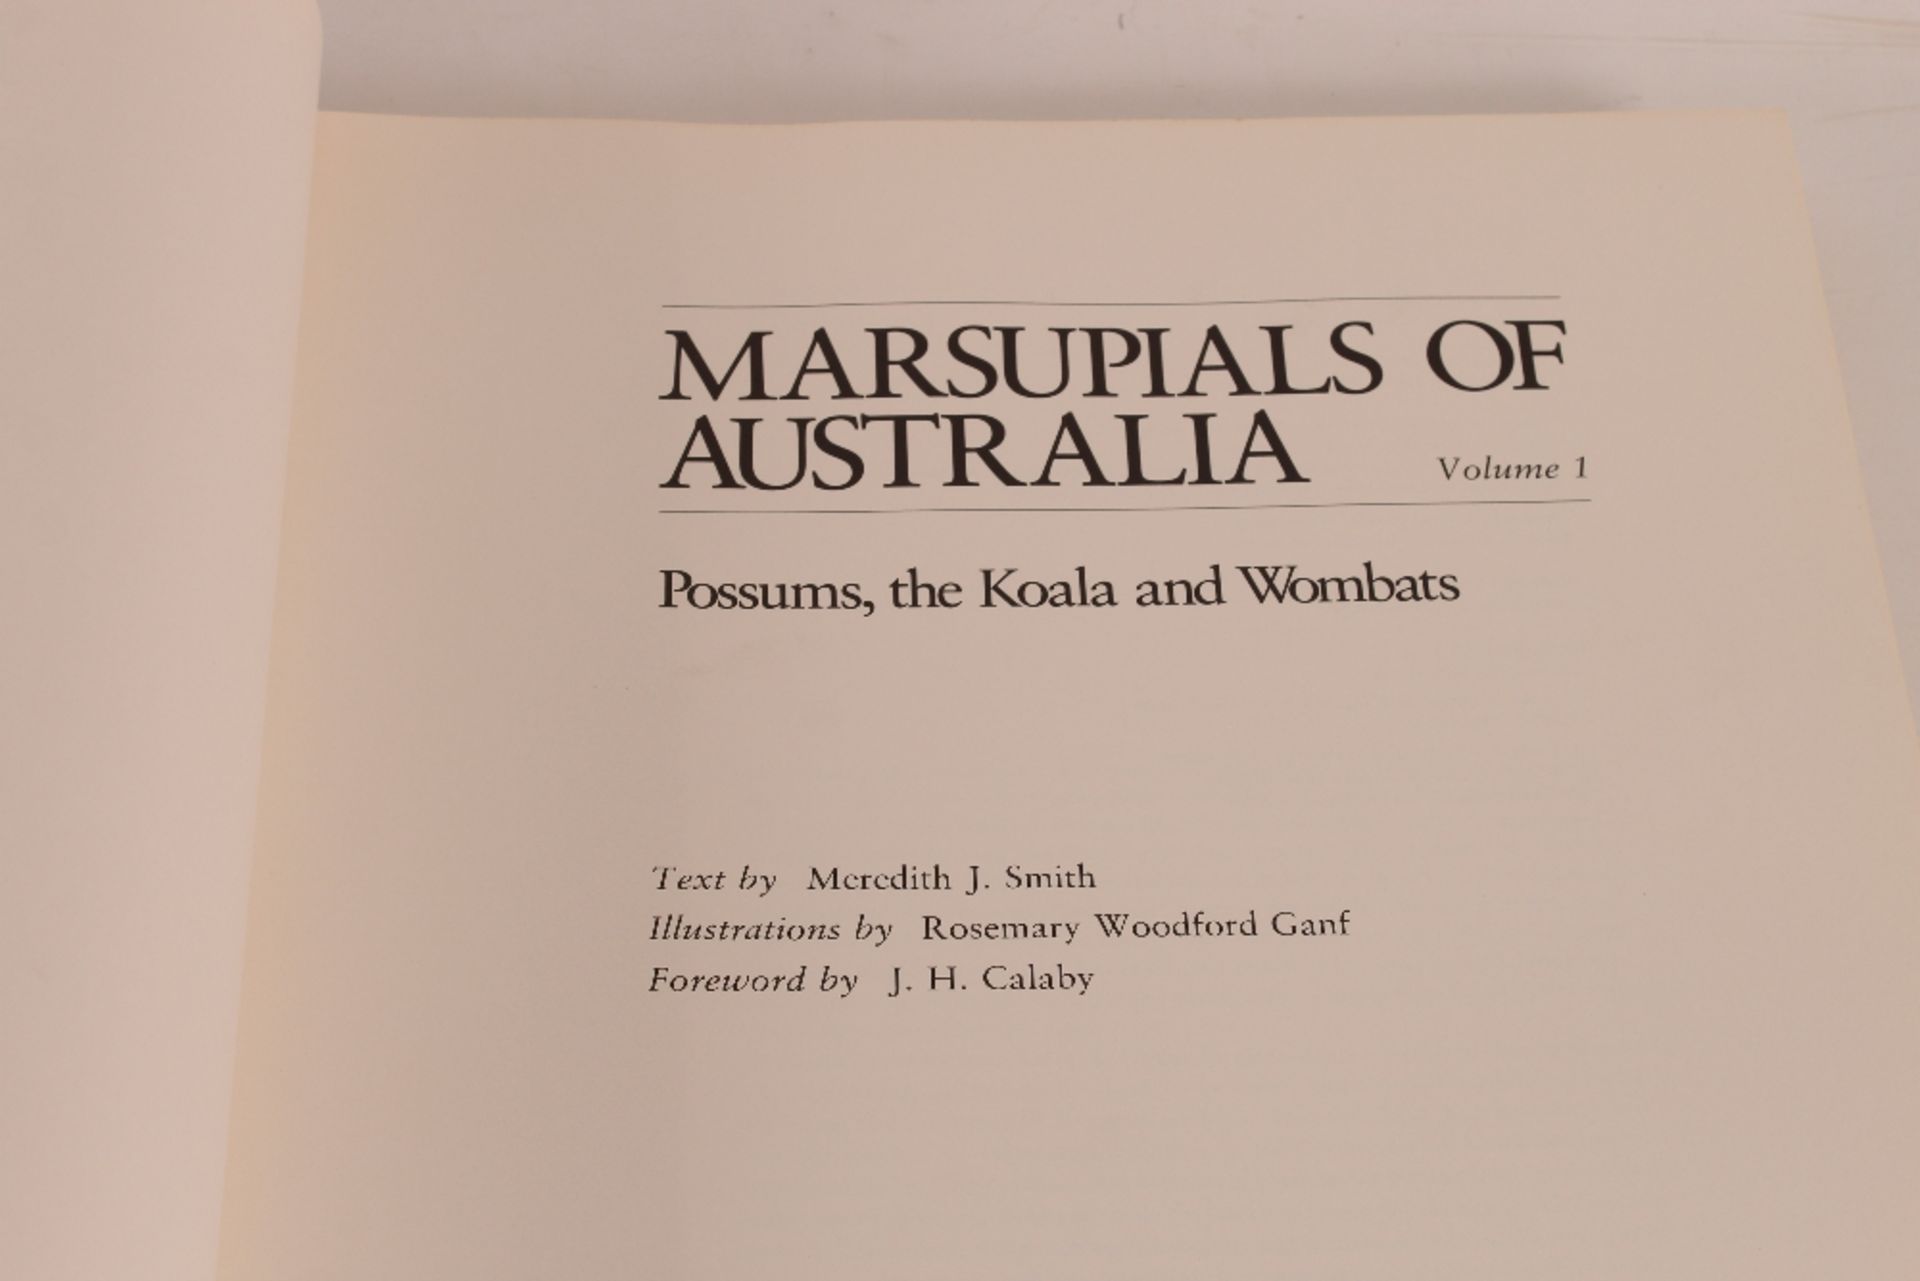 Marsupials of Australia, two volumes, Illustrated - Image 5 of 7